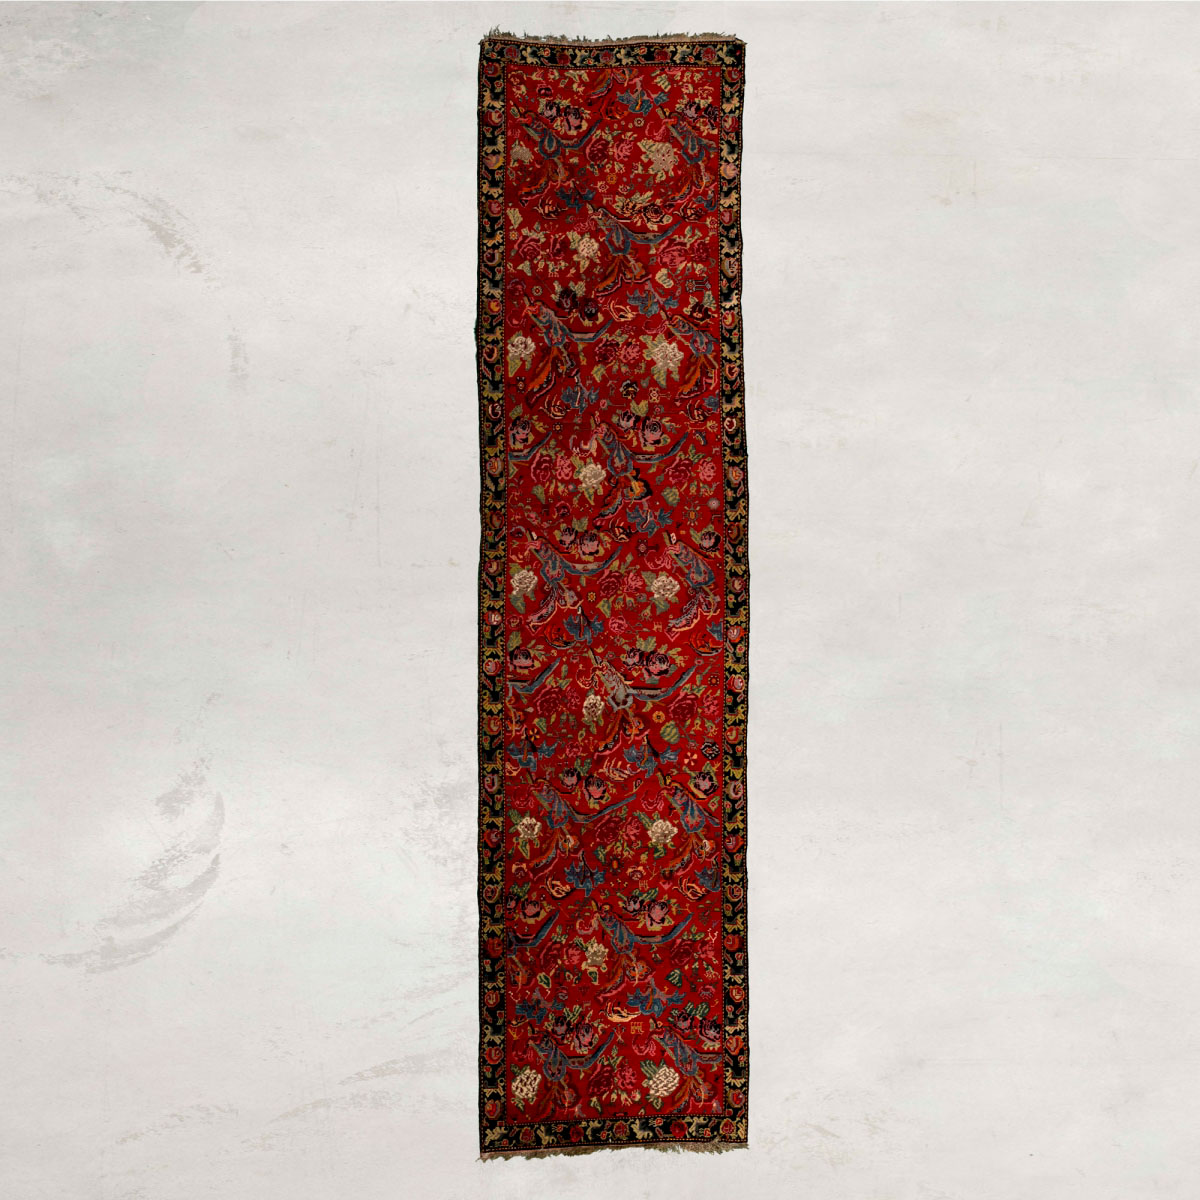 Karabagh carpet | 488 x 113 cm  Antique carpets - Persia  pic-1